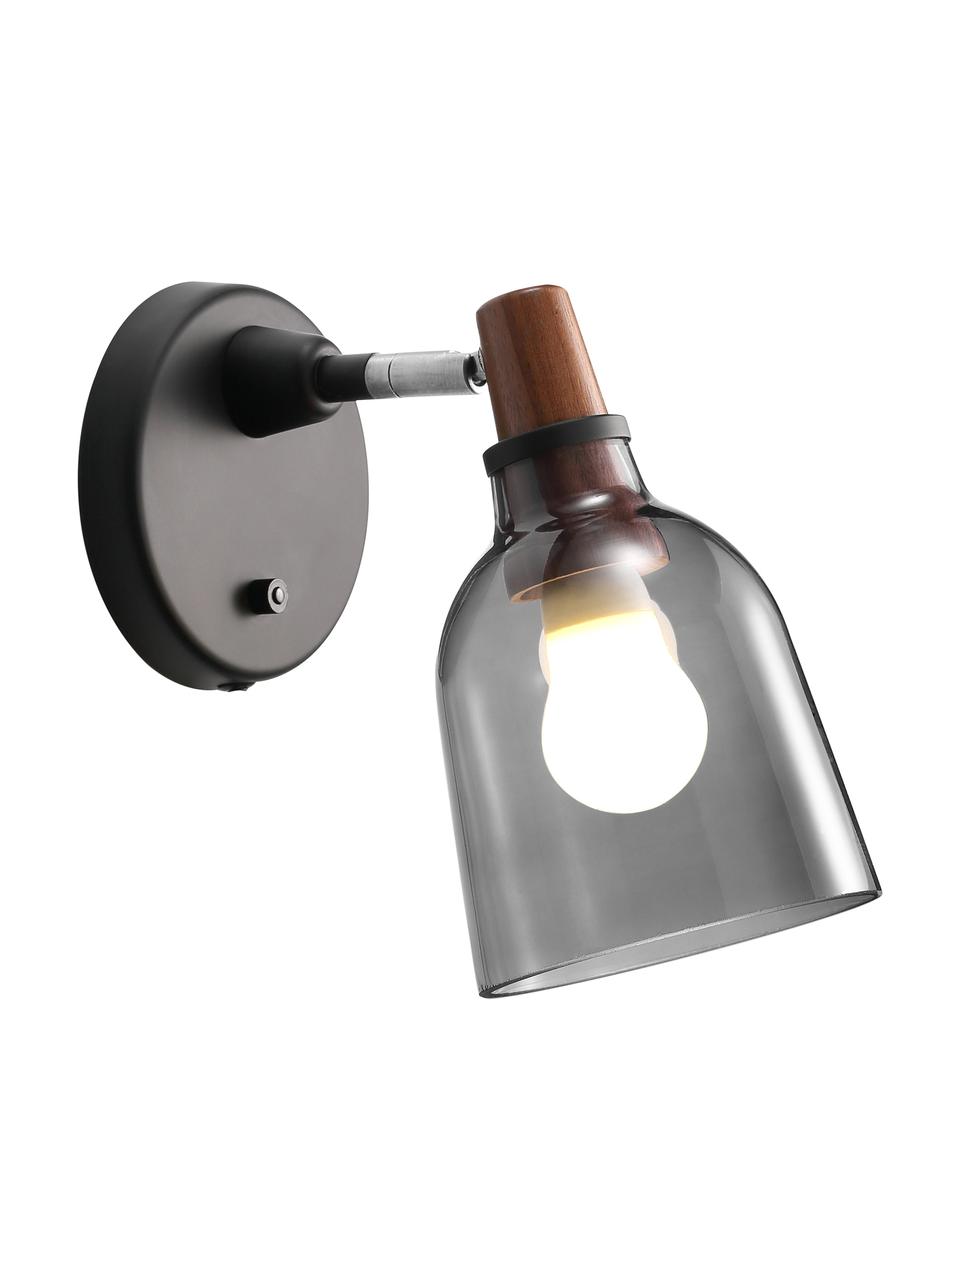 Wandlamp Karma met stekker, Lampenkap: handgegoten rookglas, Lampenkap: fumé. Bevestiging: geolied walnoothout, 14 x 24 cm